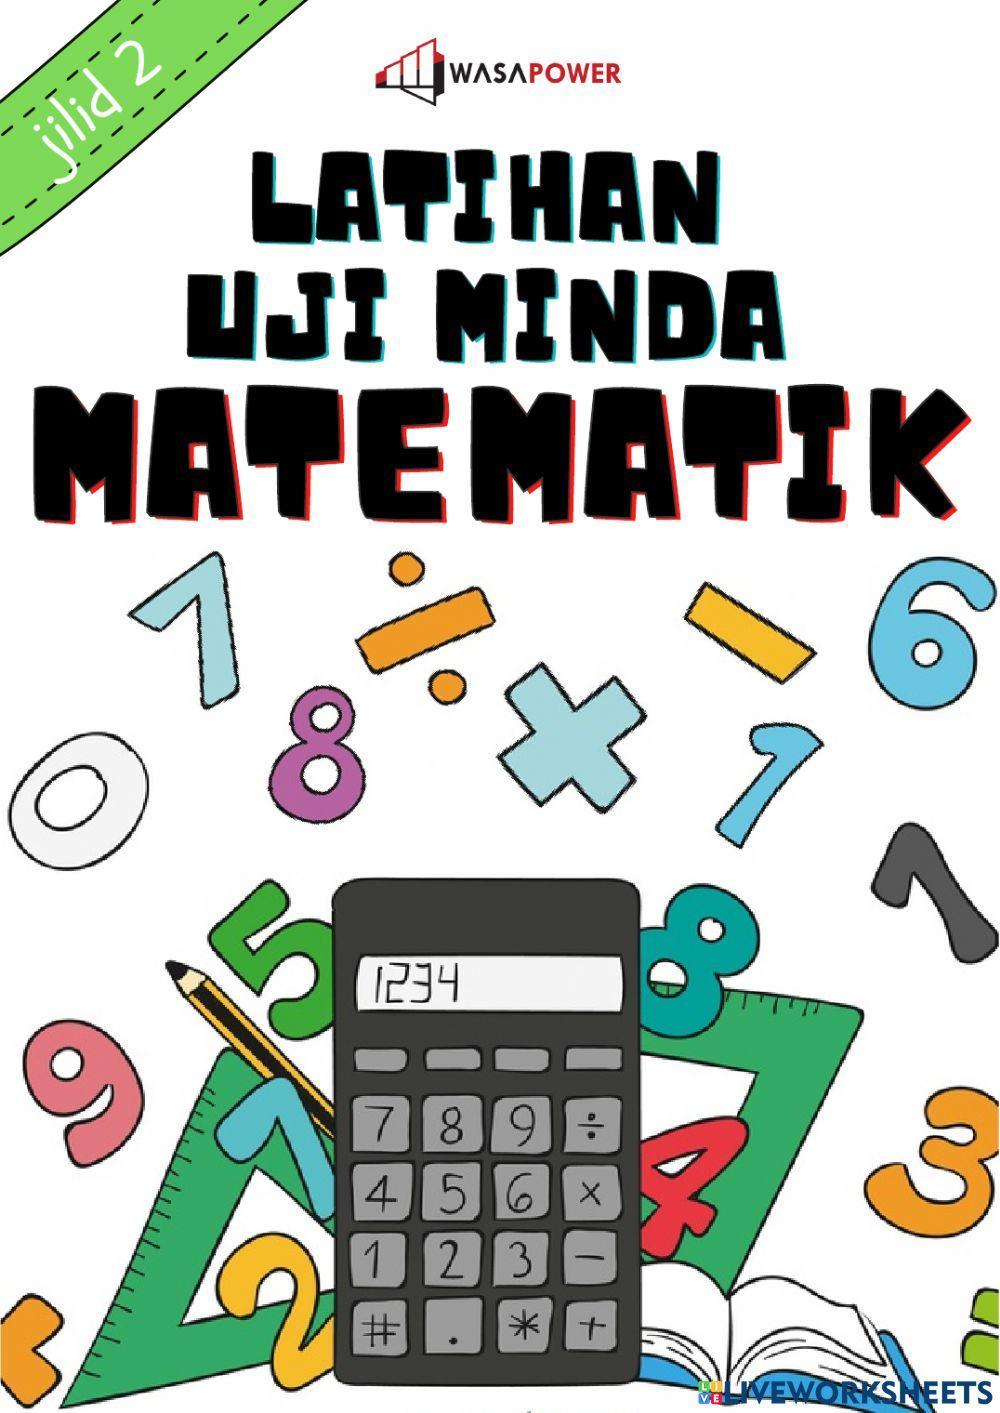 Latihan Uji Minda Matematik Jilid 2 (Part 1)